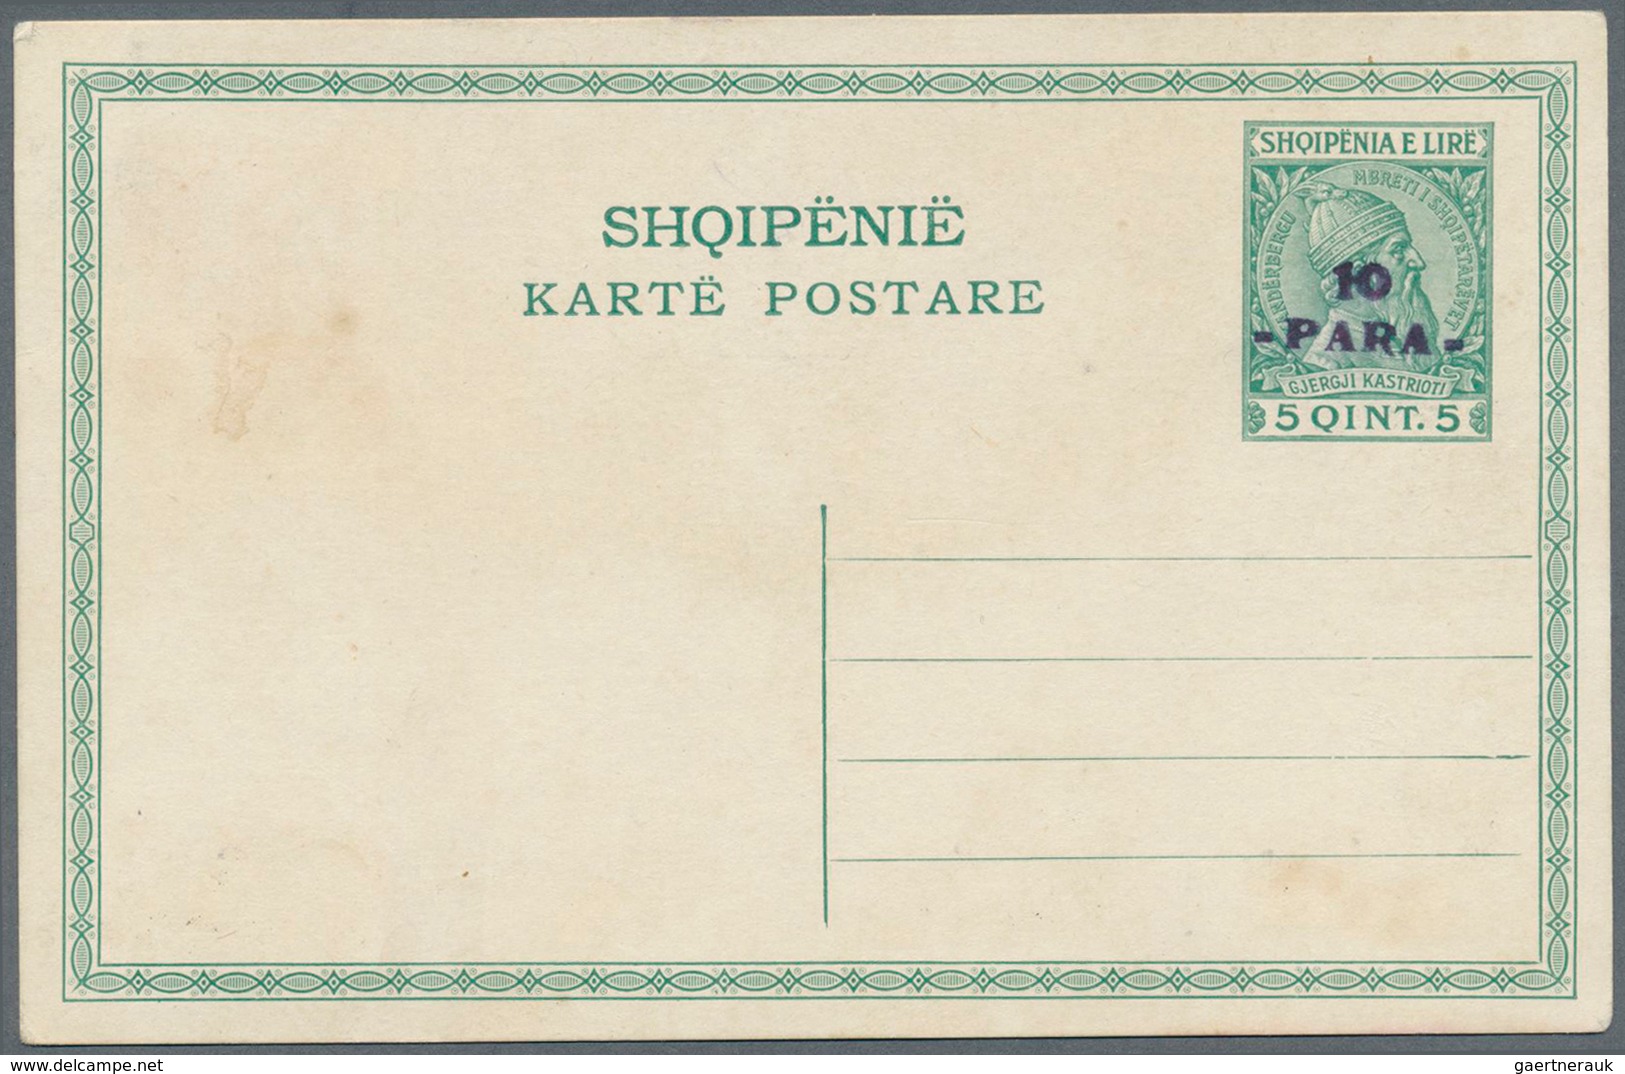 Albanien - Ganzsachen: 1914, 10 PARA On 5q. Green, Stationery Card, Unused, Few Small Stains. - Albanië